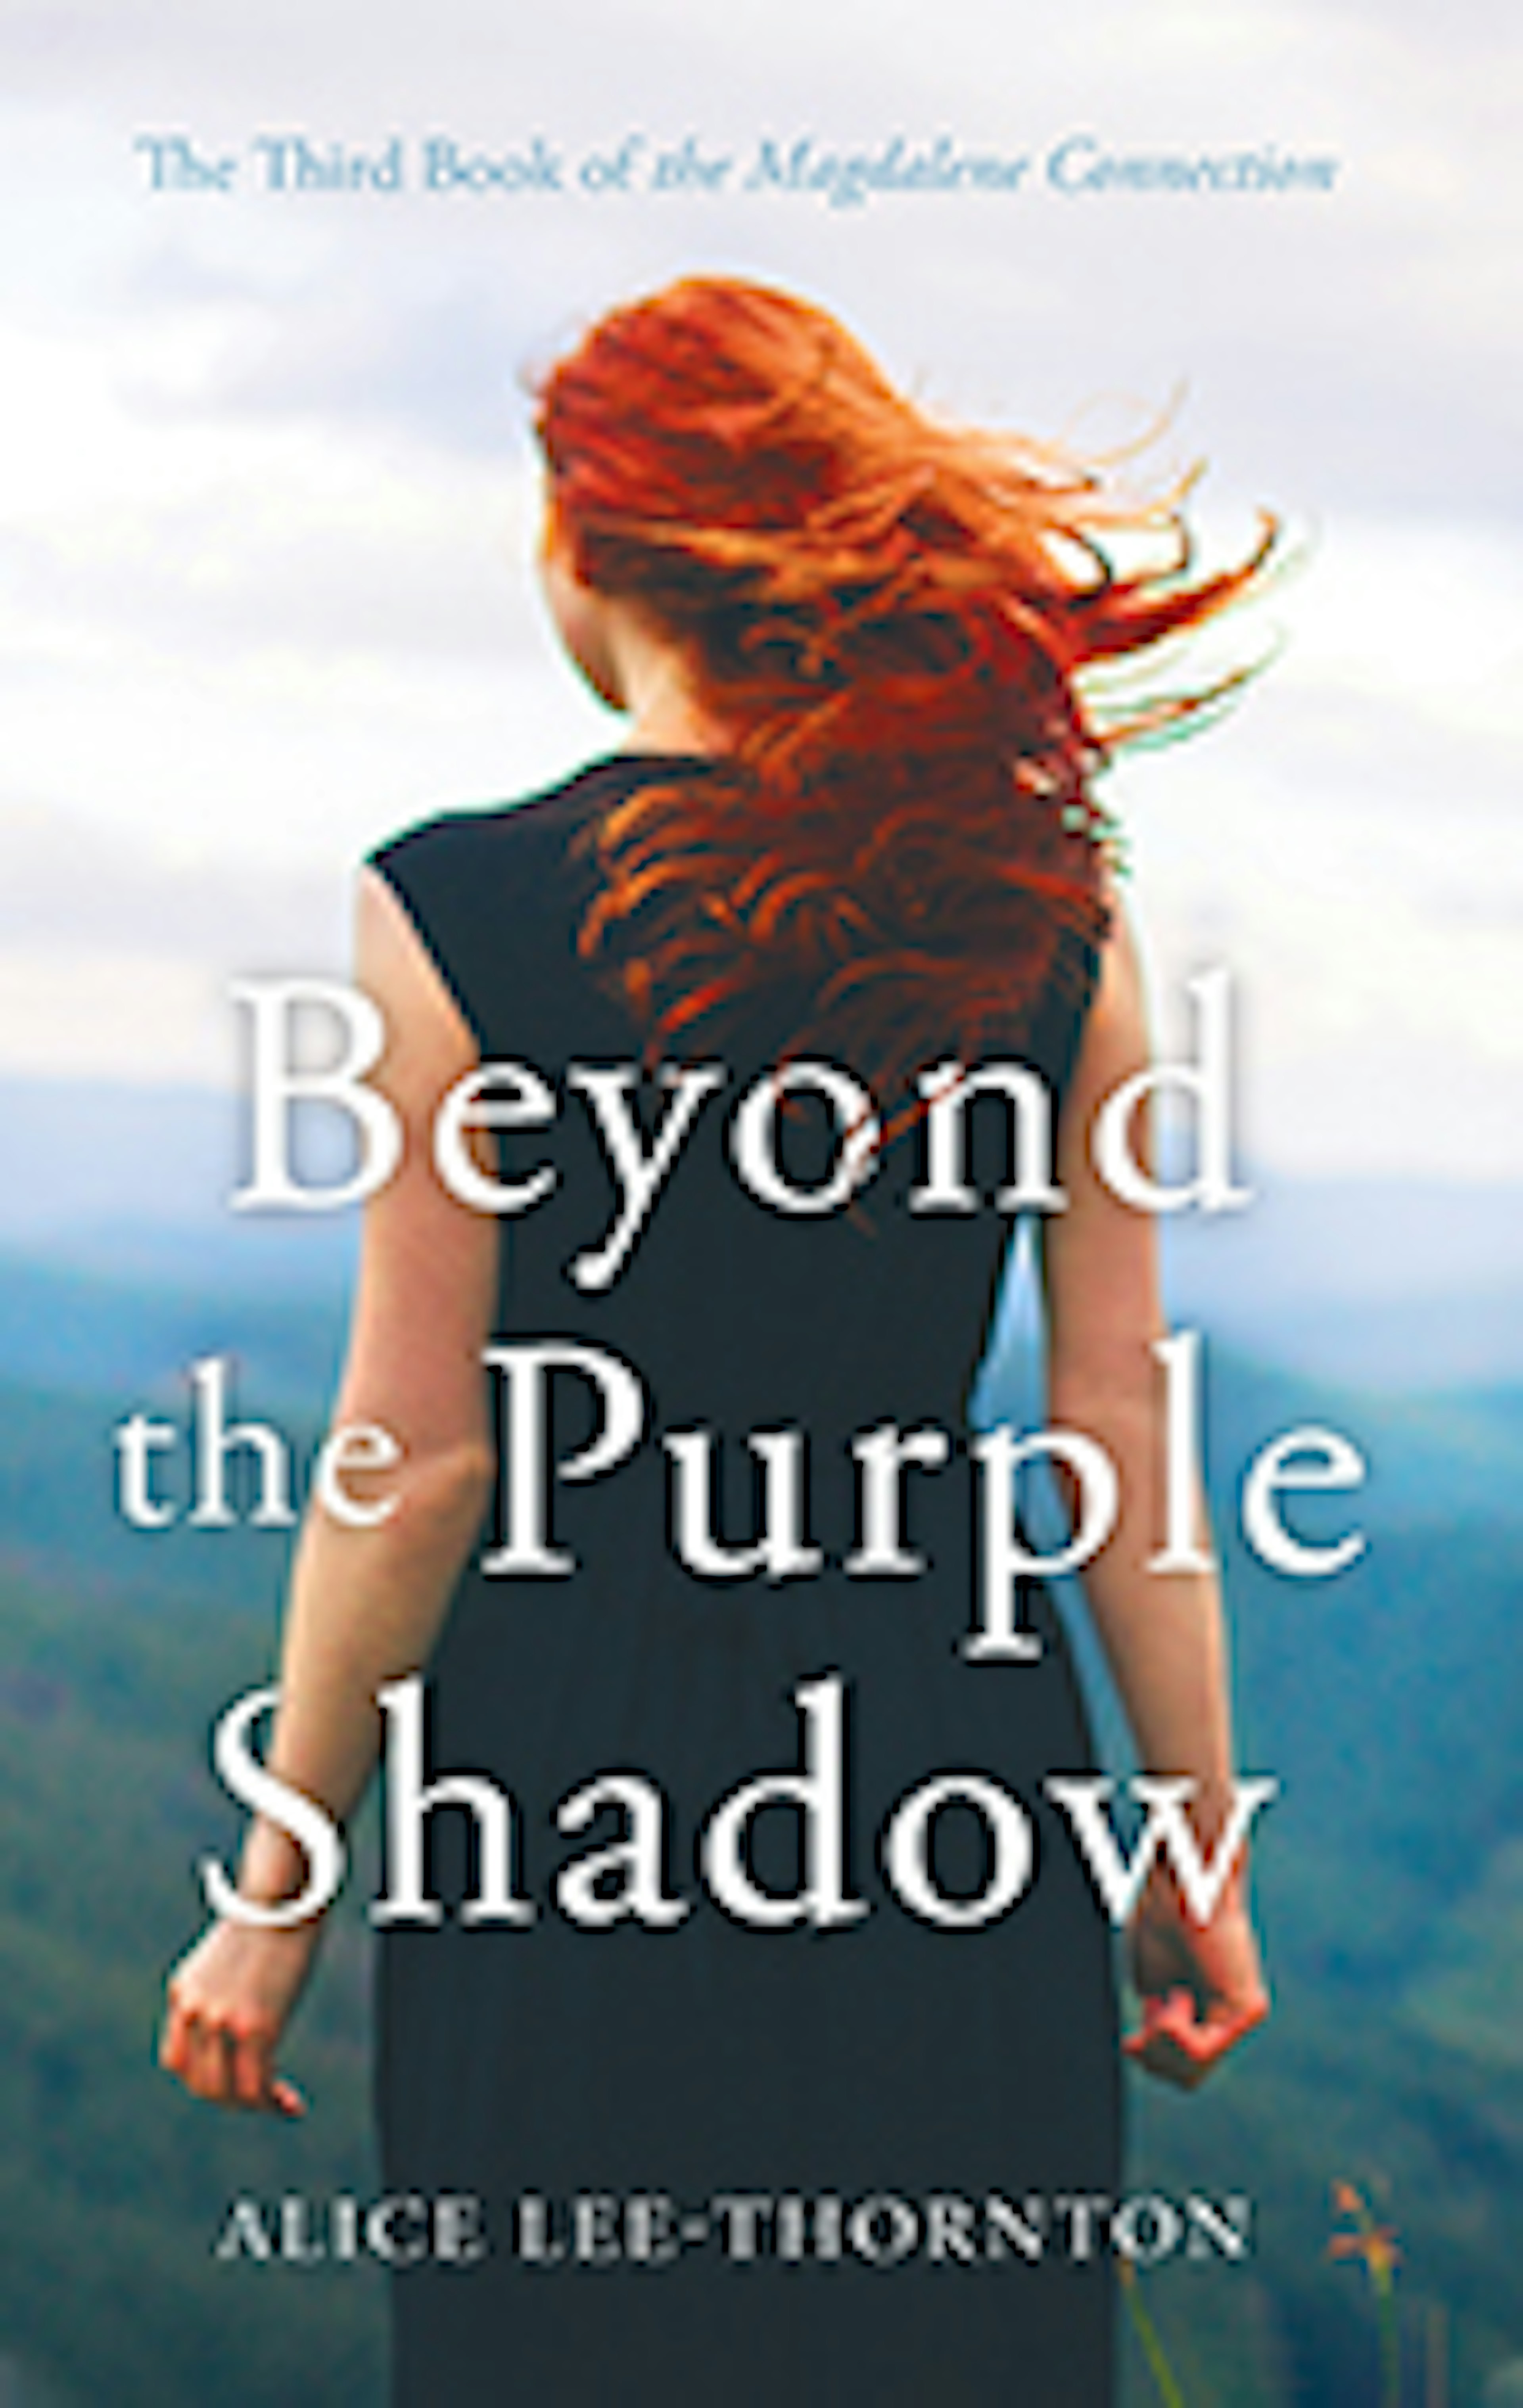 Beyond the Purple Shadow